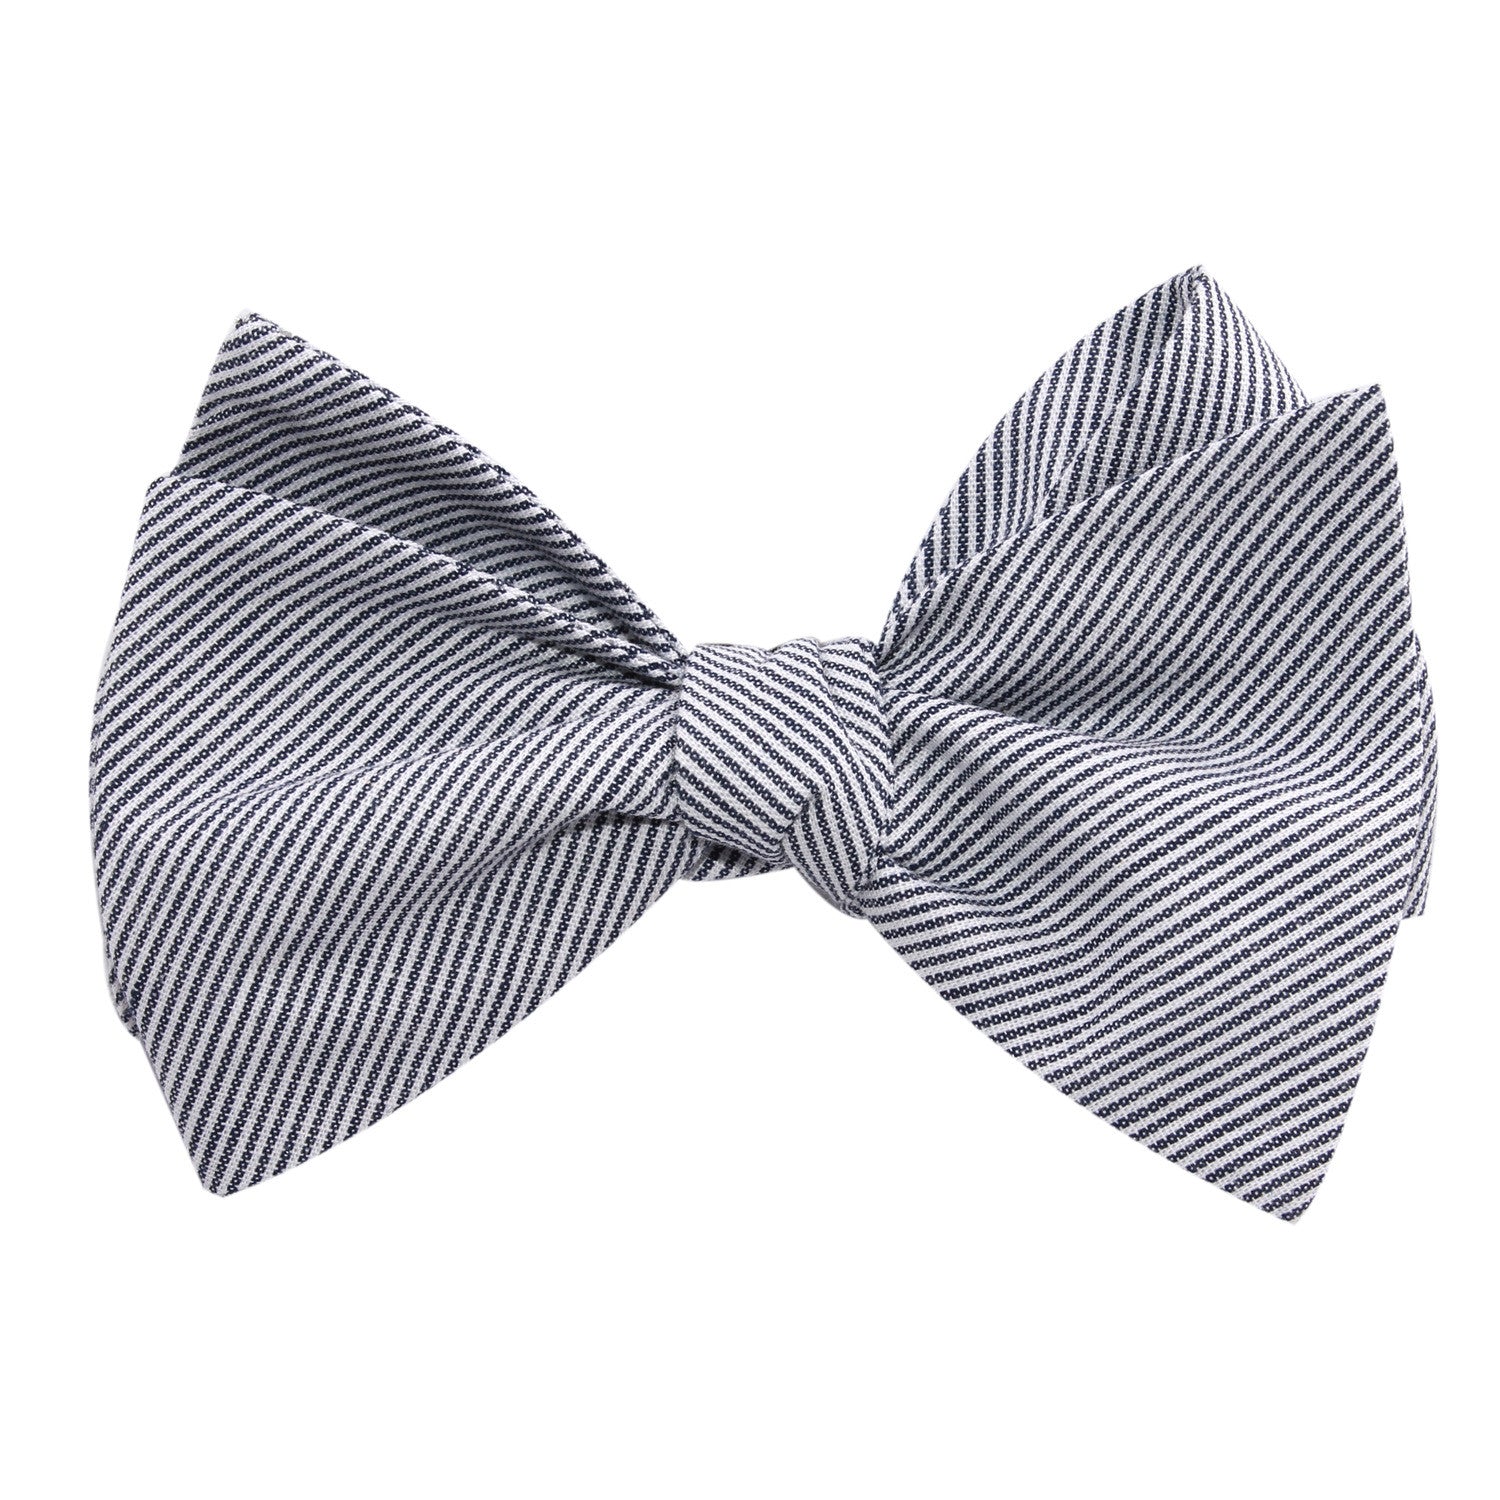 Black and White Pinstripe Cotton Self Tie Bow Tie 1